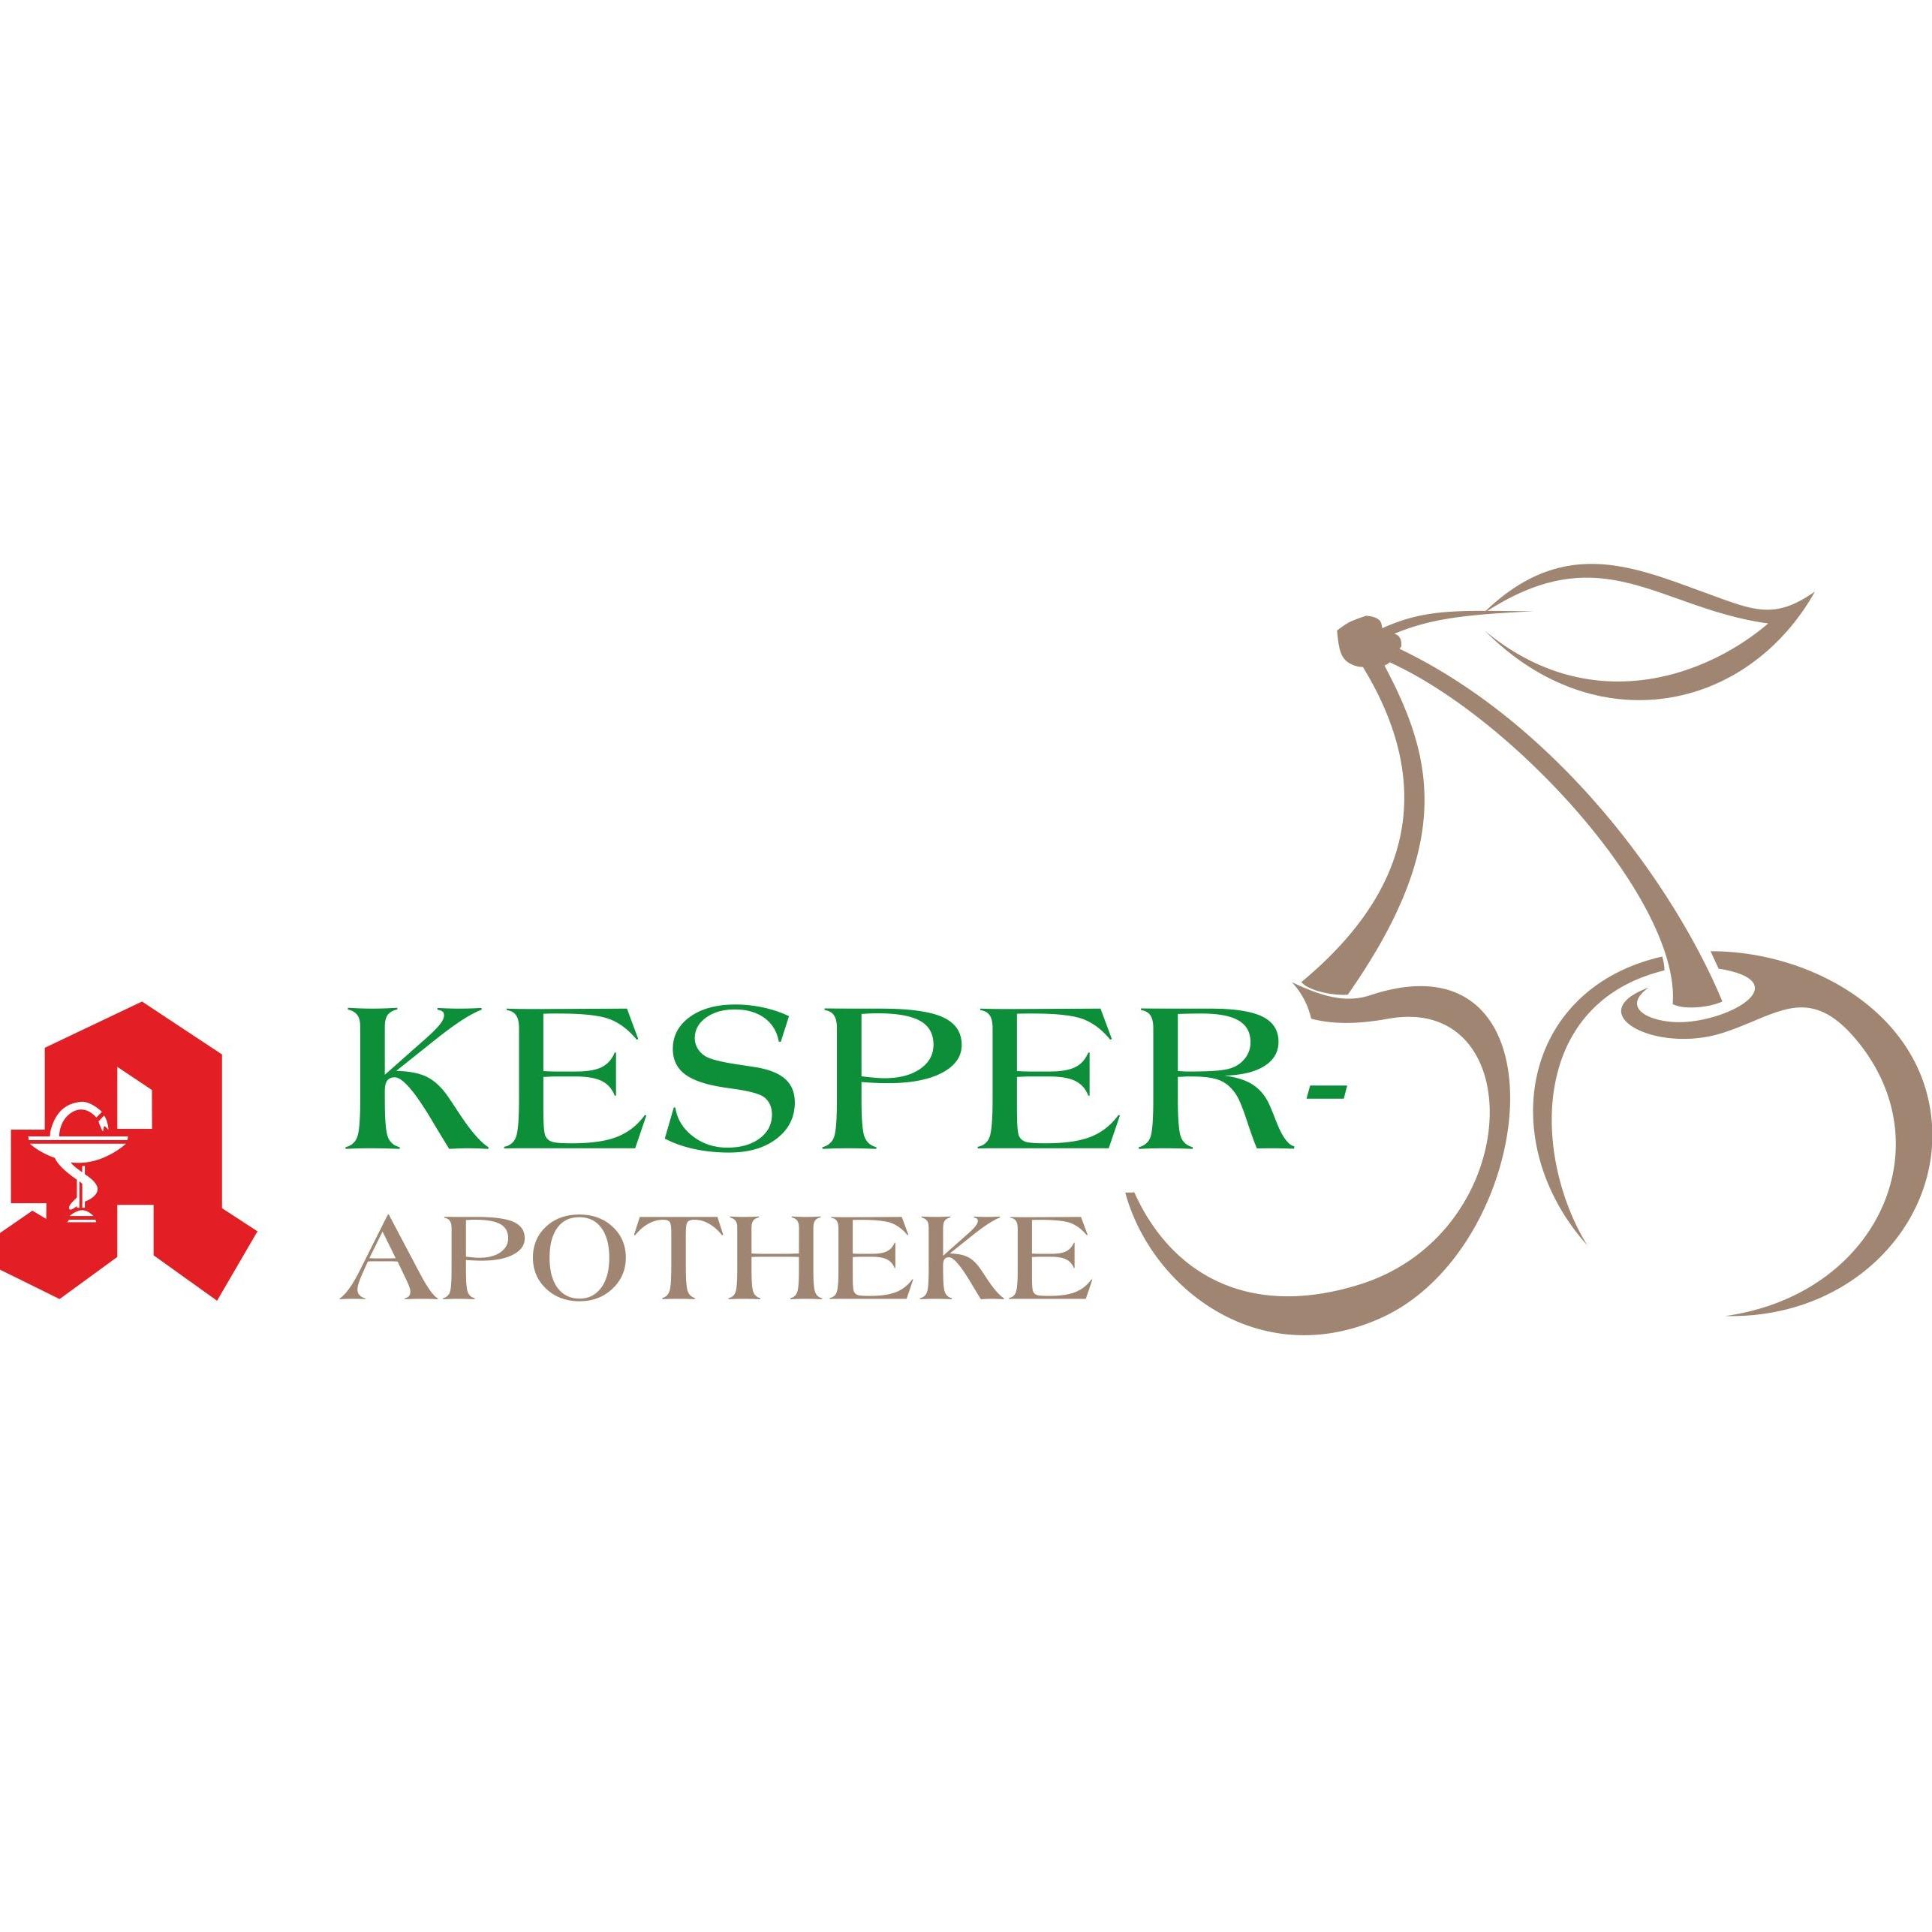 Kesper-Apotheke Inh. Andreas Illing e.K. Logo